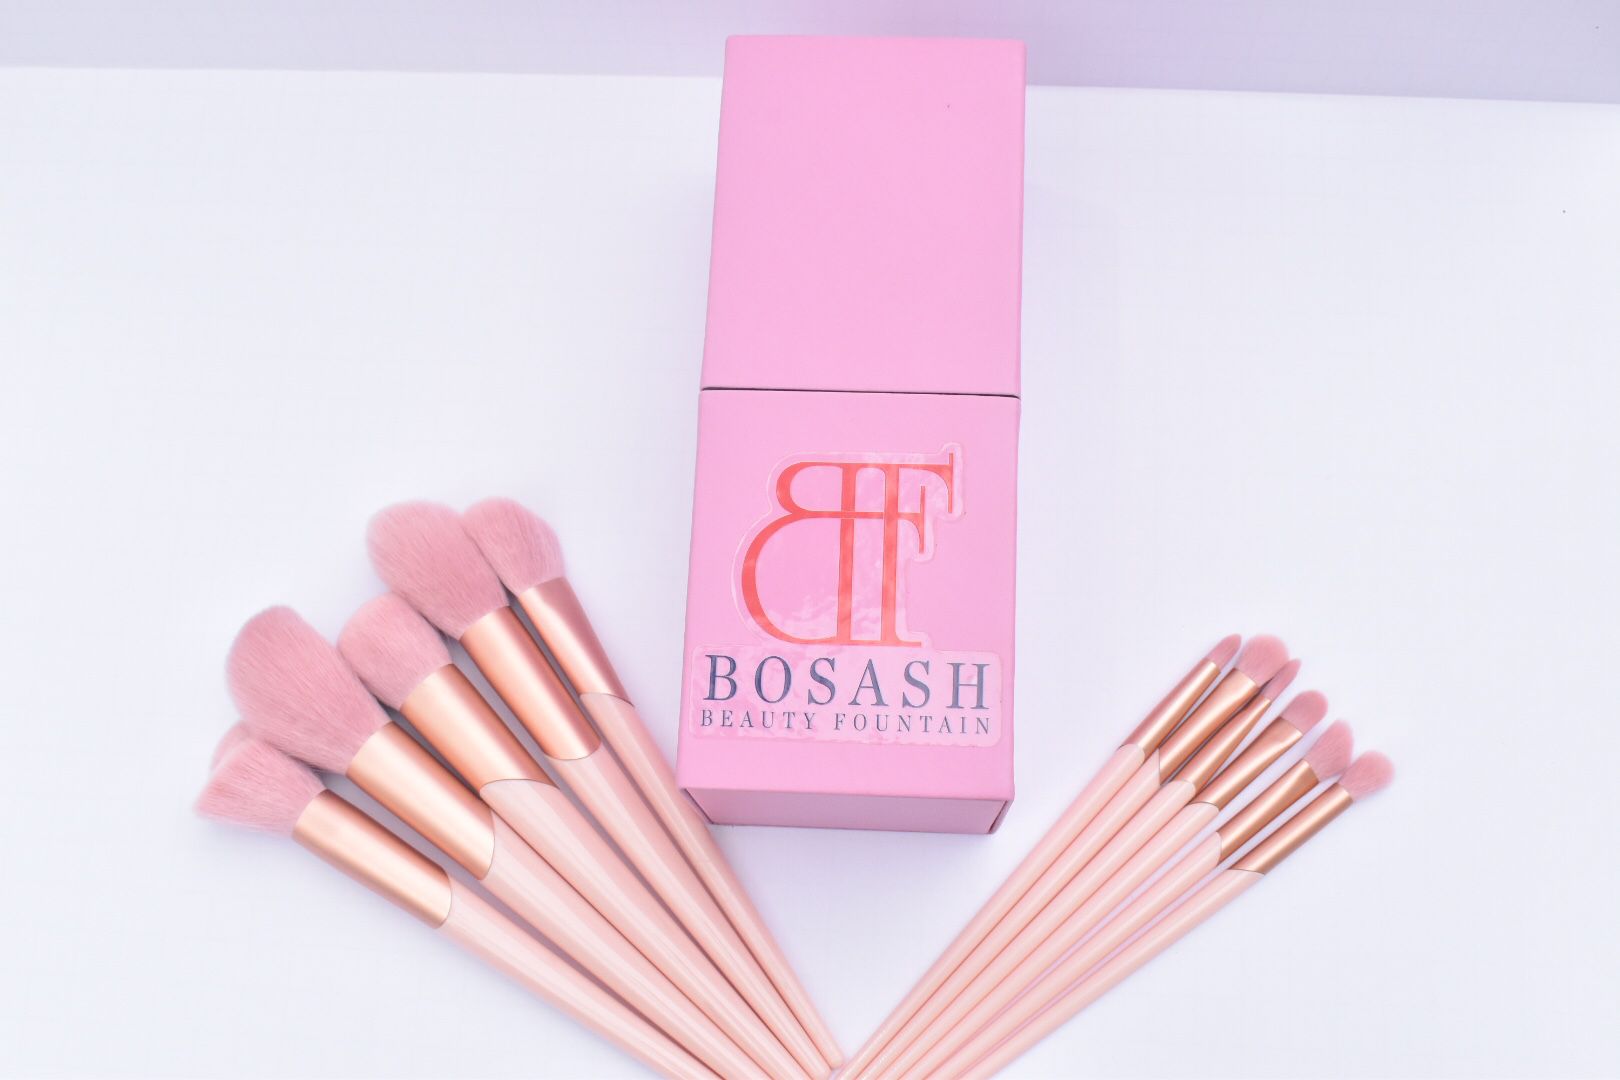 Makeup brush kit with Pink case -11 pieces